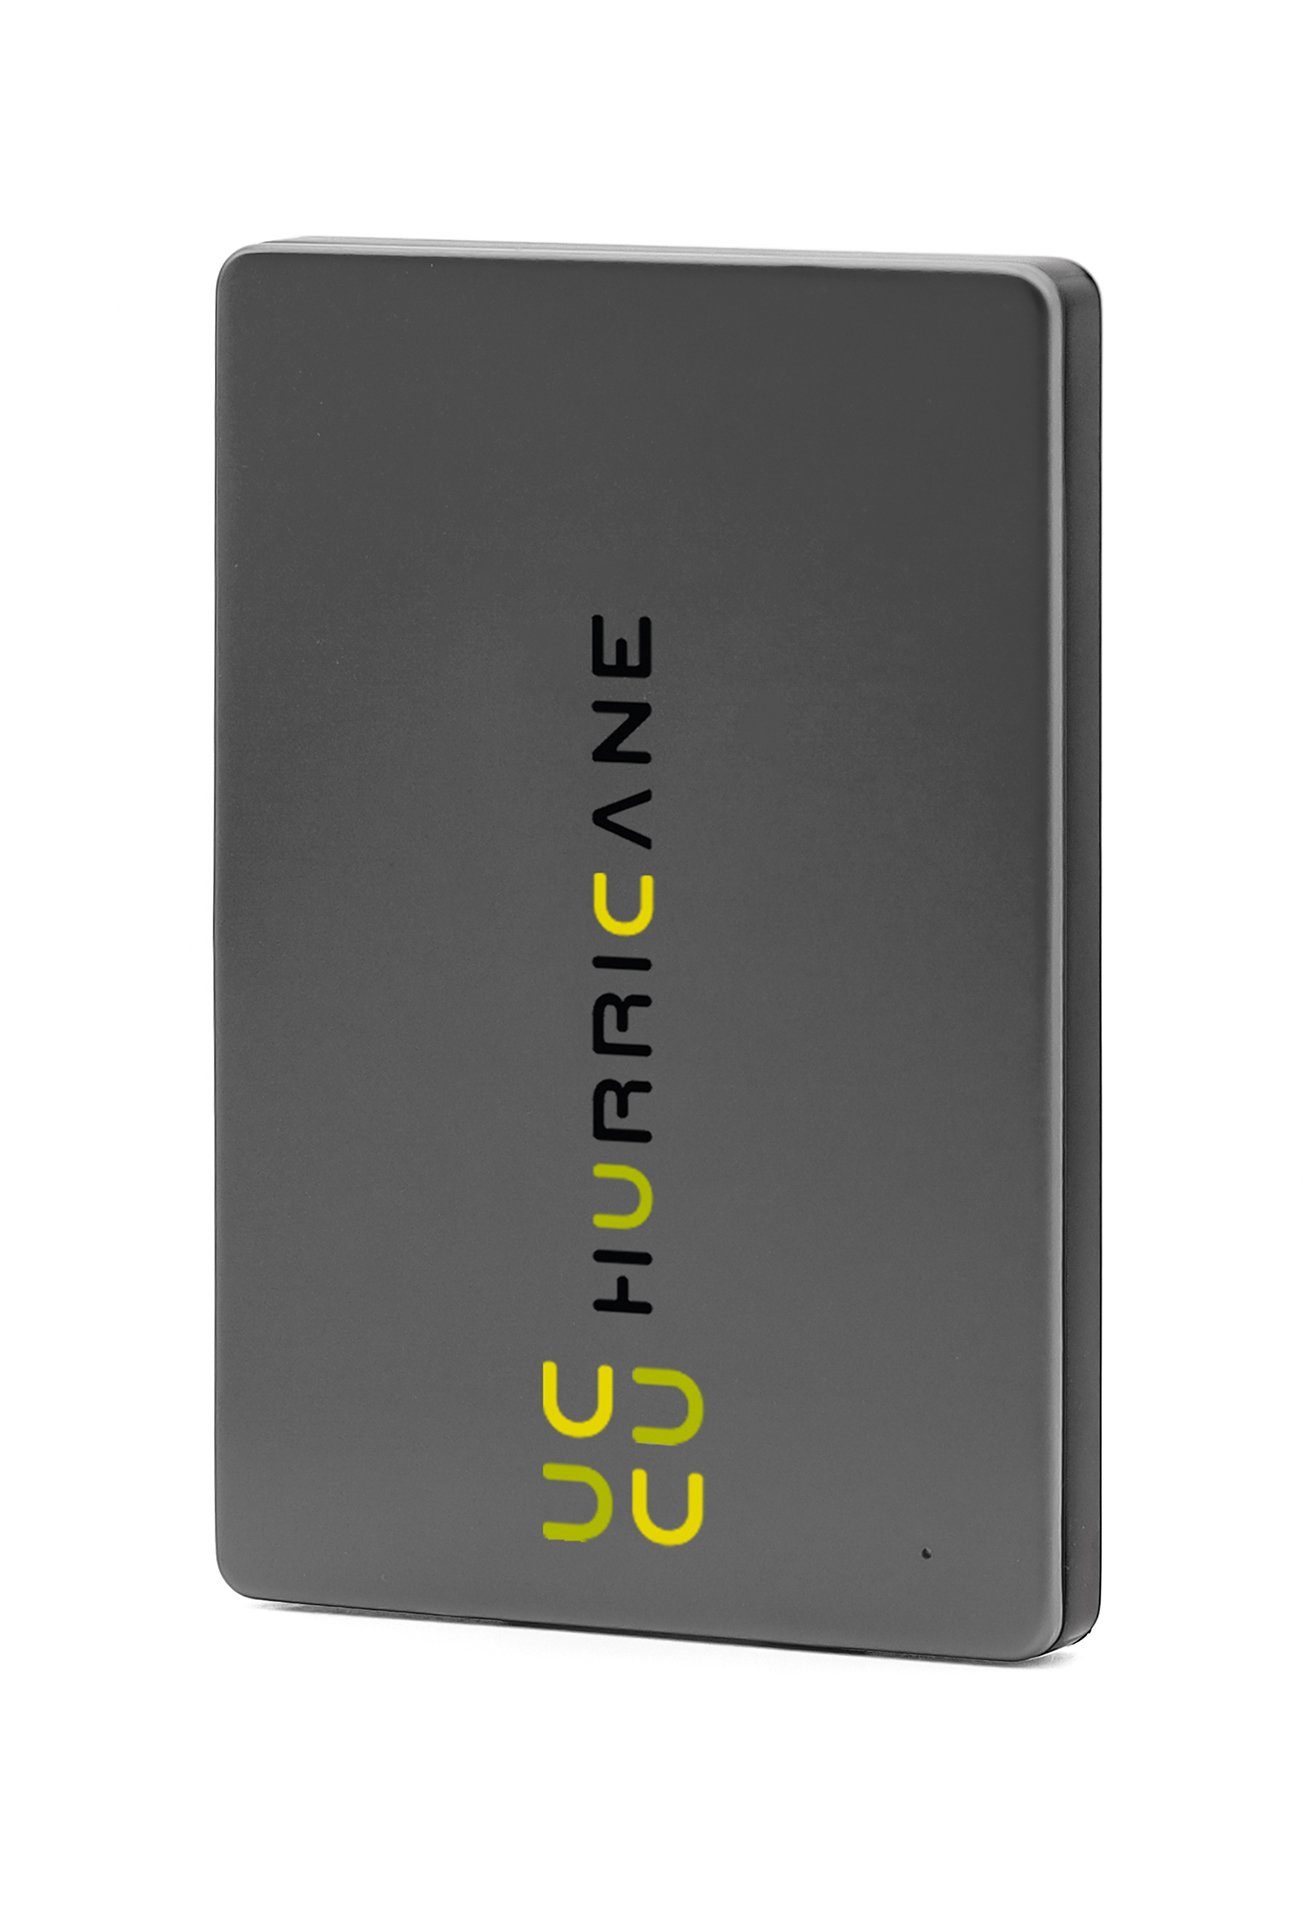 HURRICANE MD25U3 Tragbare Externe Festplatte 2TB 2,5" USB 3.0 externe HDD-Festplatte (2TB) 2,5", für PC Laptop TV PS4 PS5 Xbox, kompatibel mit Windows Mac und Linux